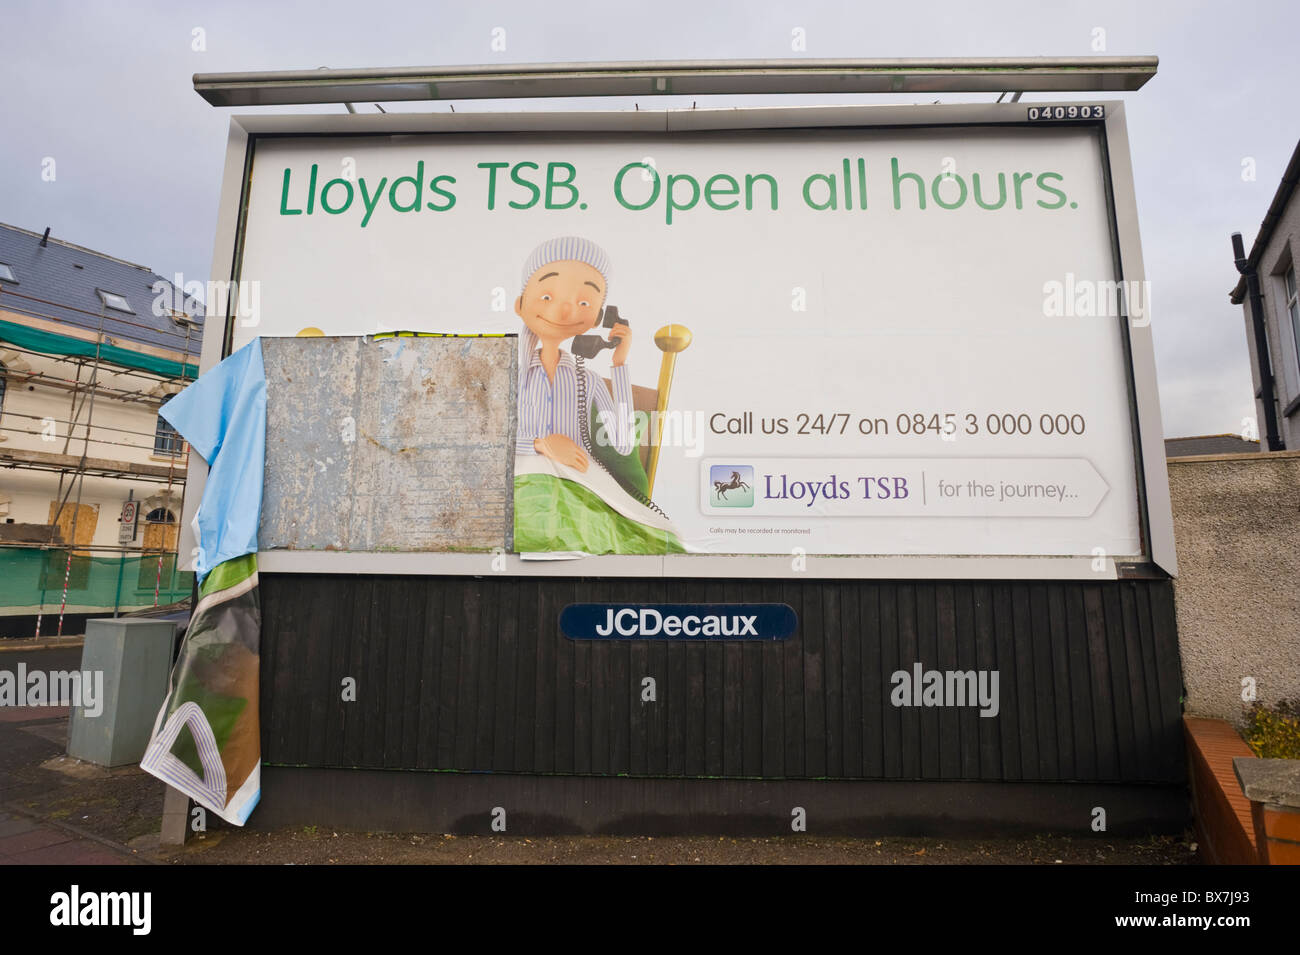 Lloyds Tsb Online Banking Adverts Google Search Bank Branding